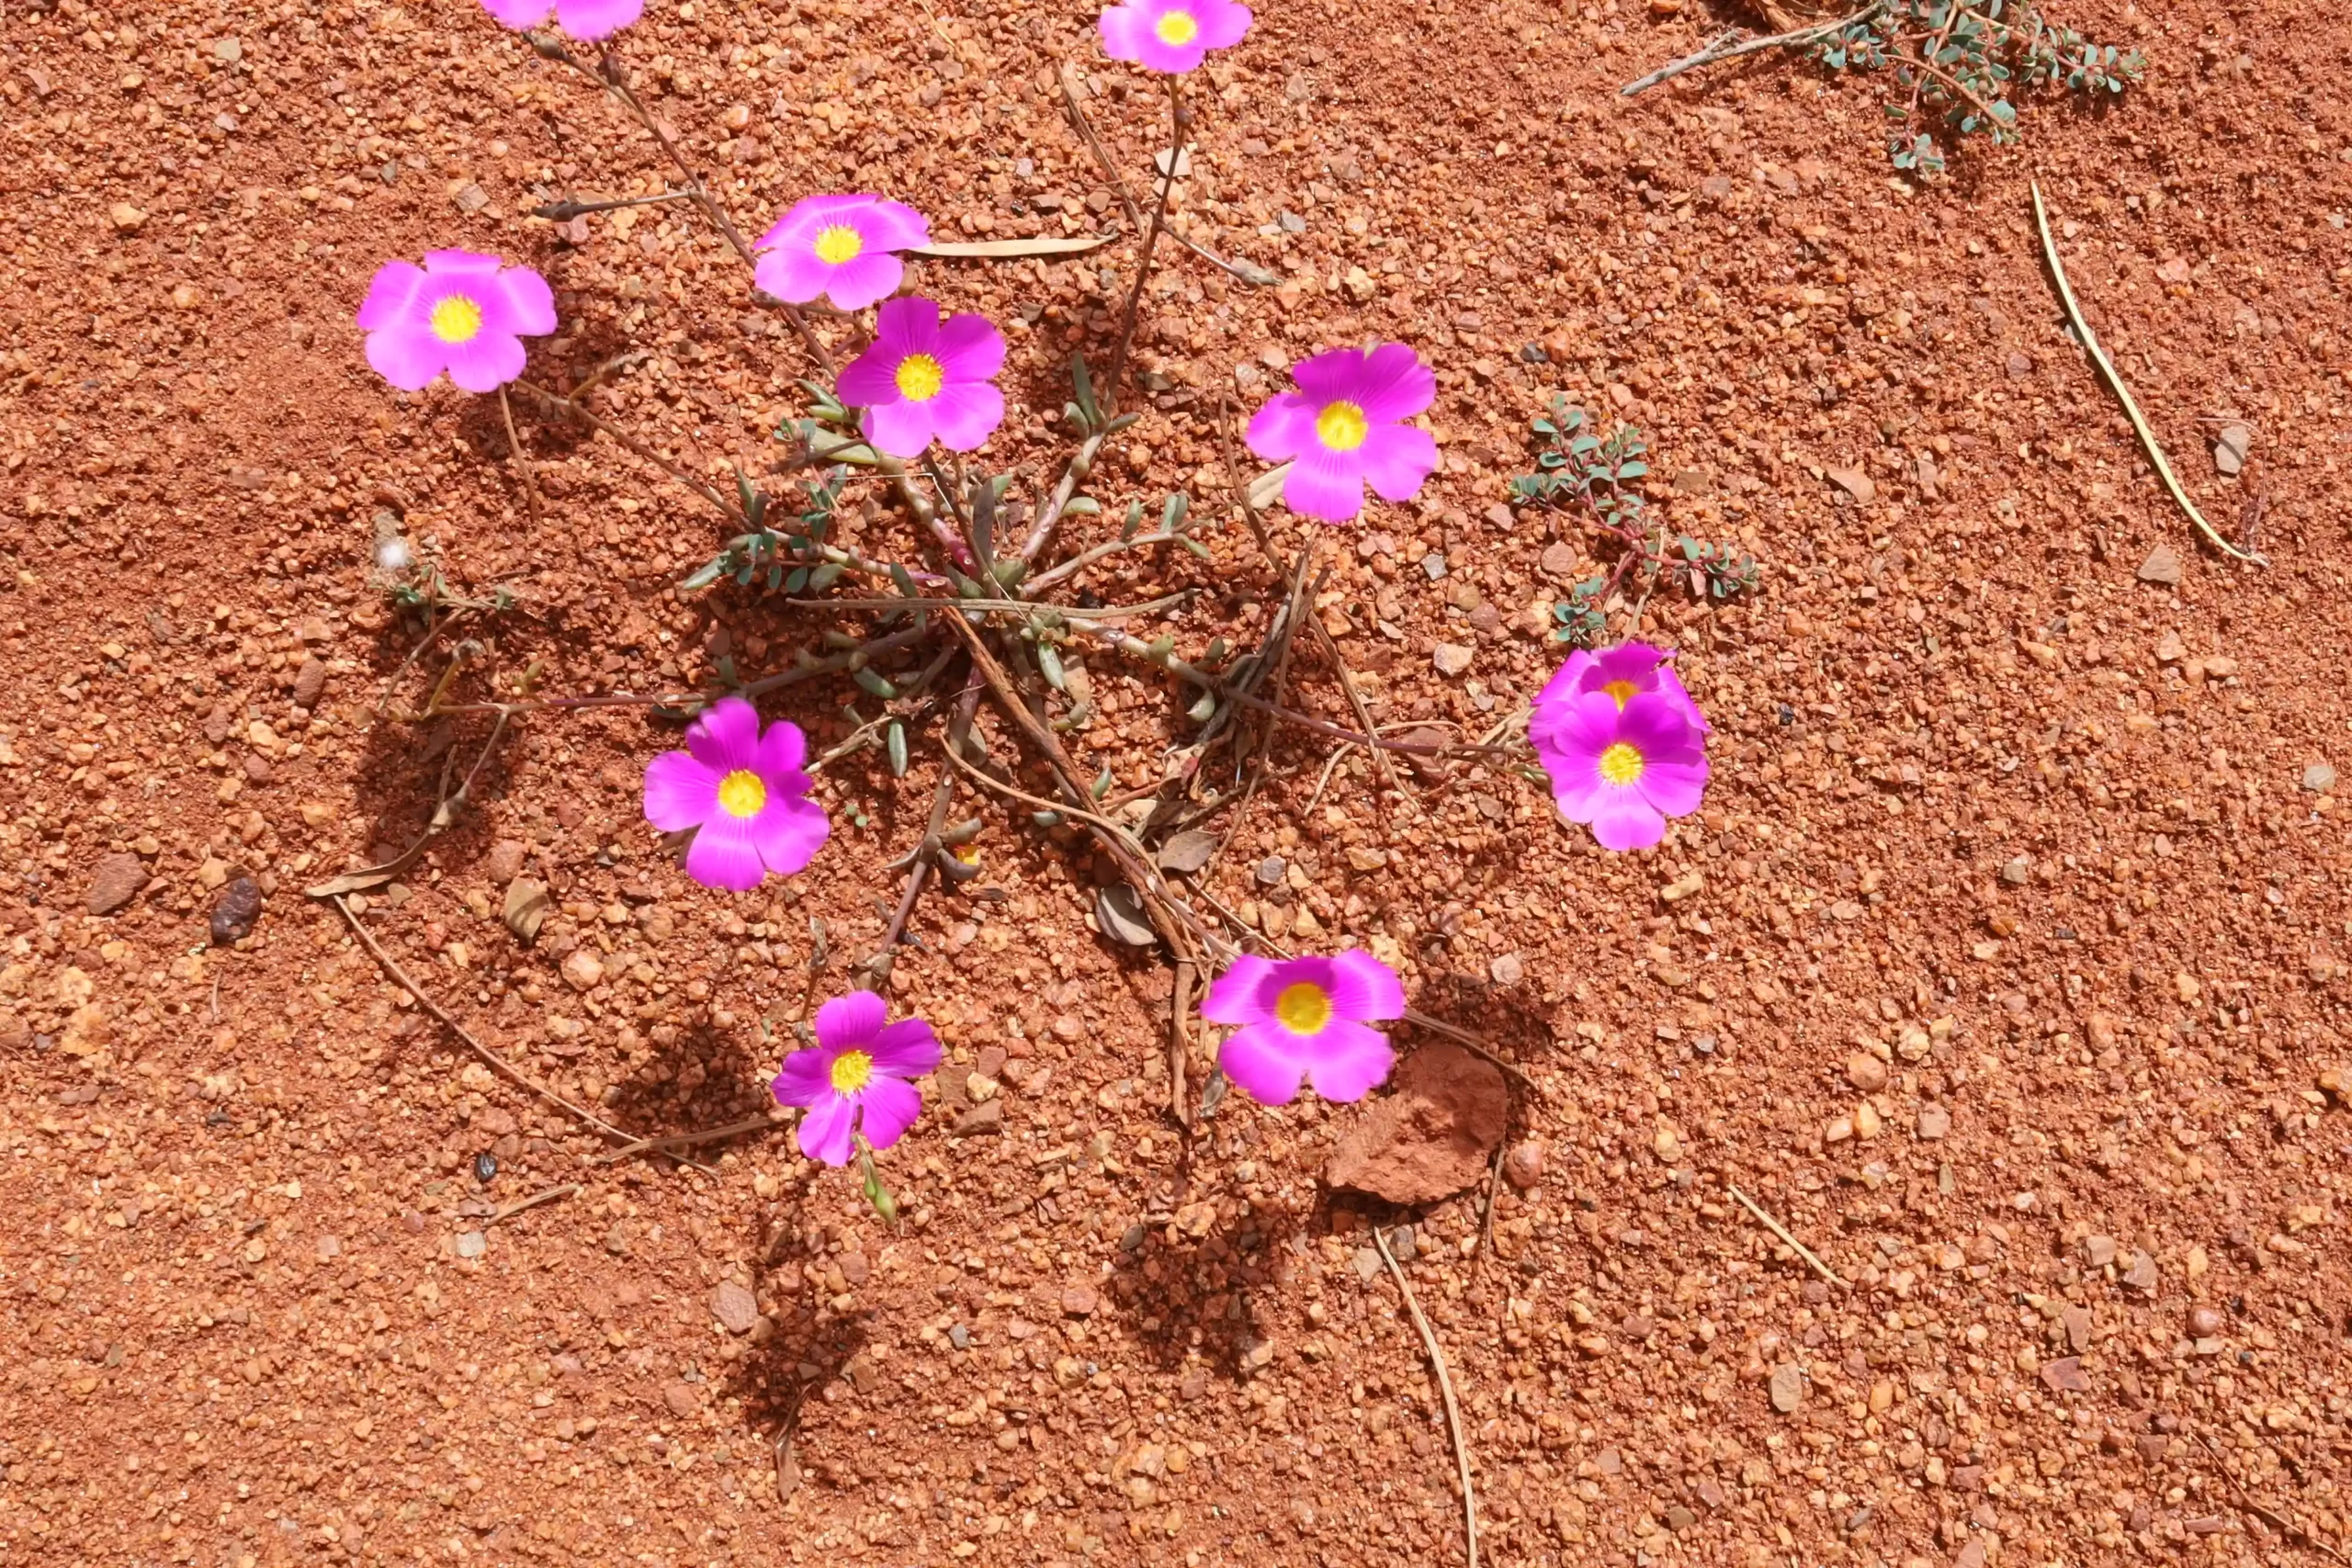 Calandrinia calyptrata or Pink Purslane is an annual plant endemic to Australia.